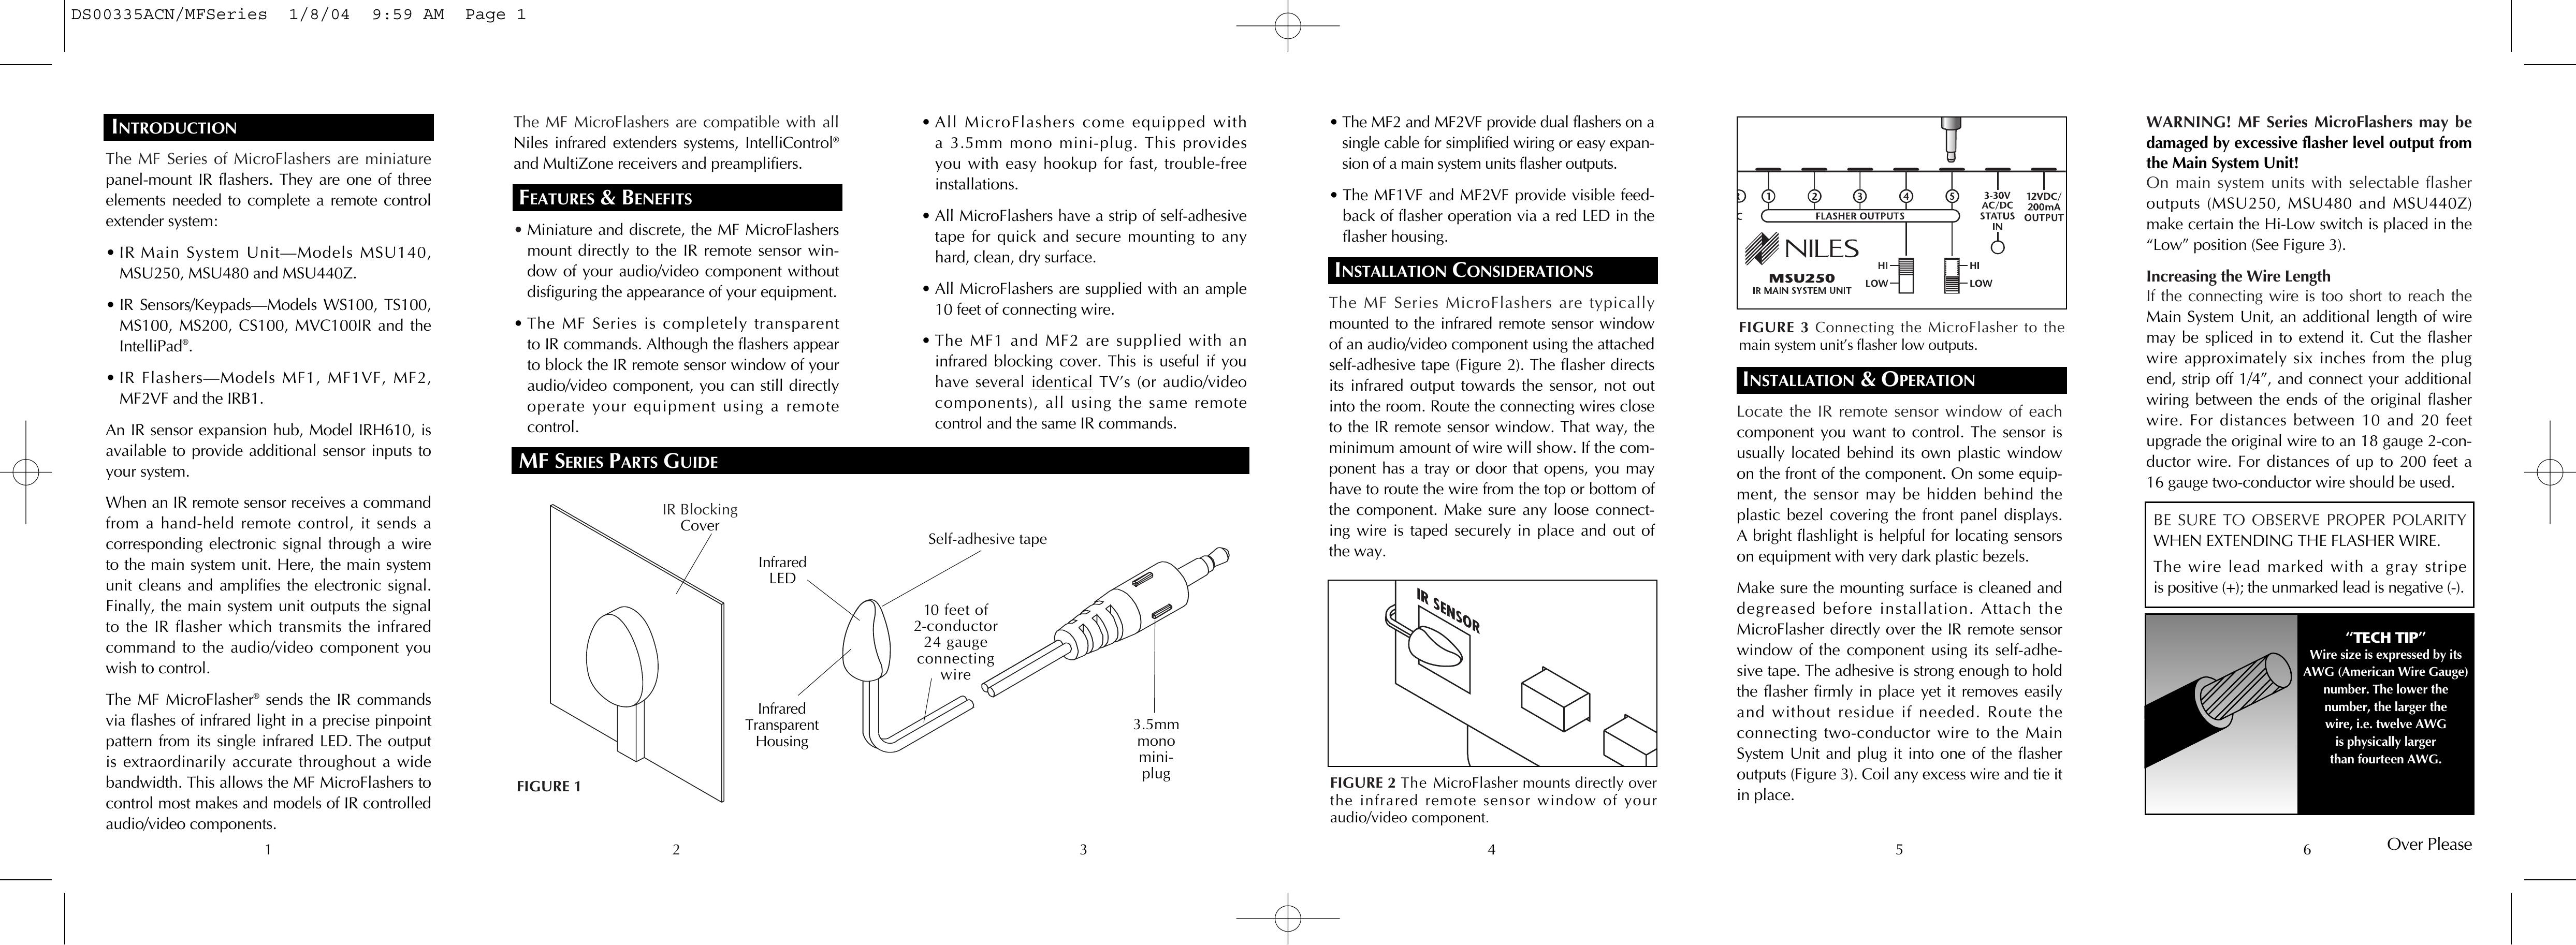 Niles Audio MSU480 Microscope & Magnifier User Manual